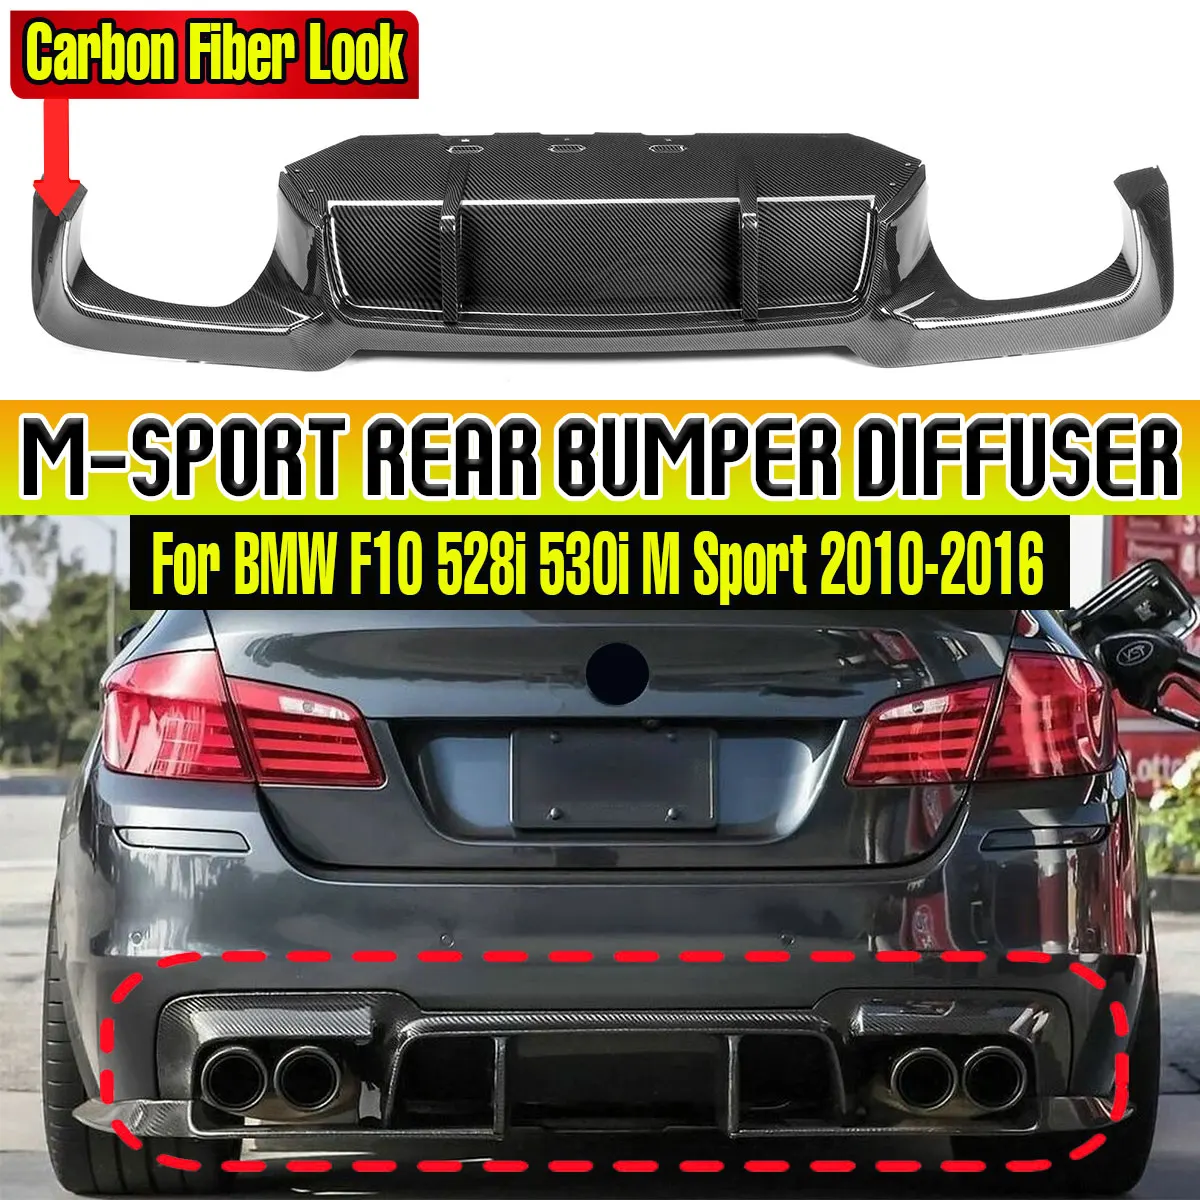 

Rear Bumper Diffuser Lip Splitter For BMW F10 528i 530i M Sport 2010 2011 2012 2013 2014 2015 2016 Rear Bumper Spoiler Diffuser